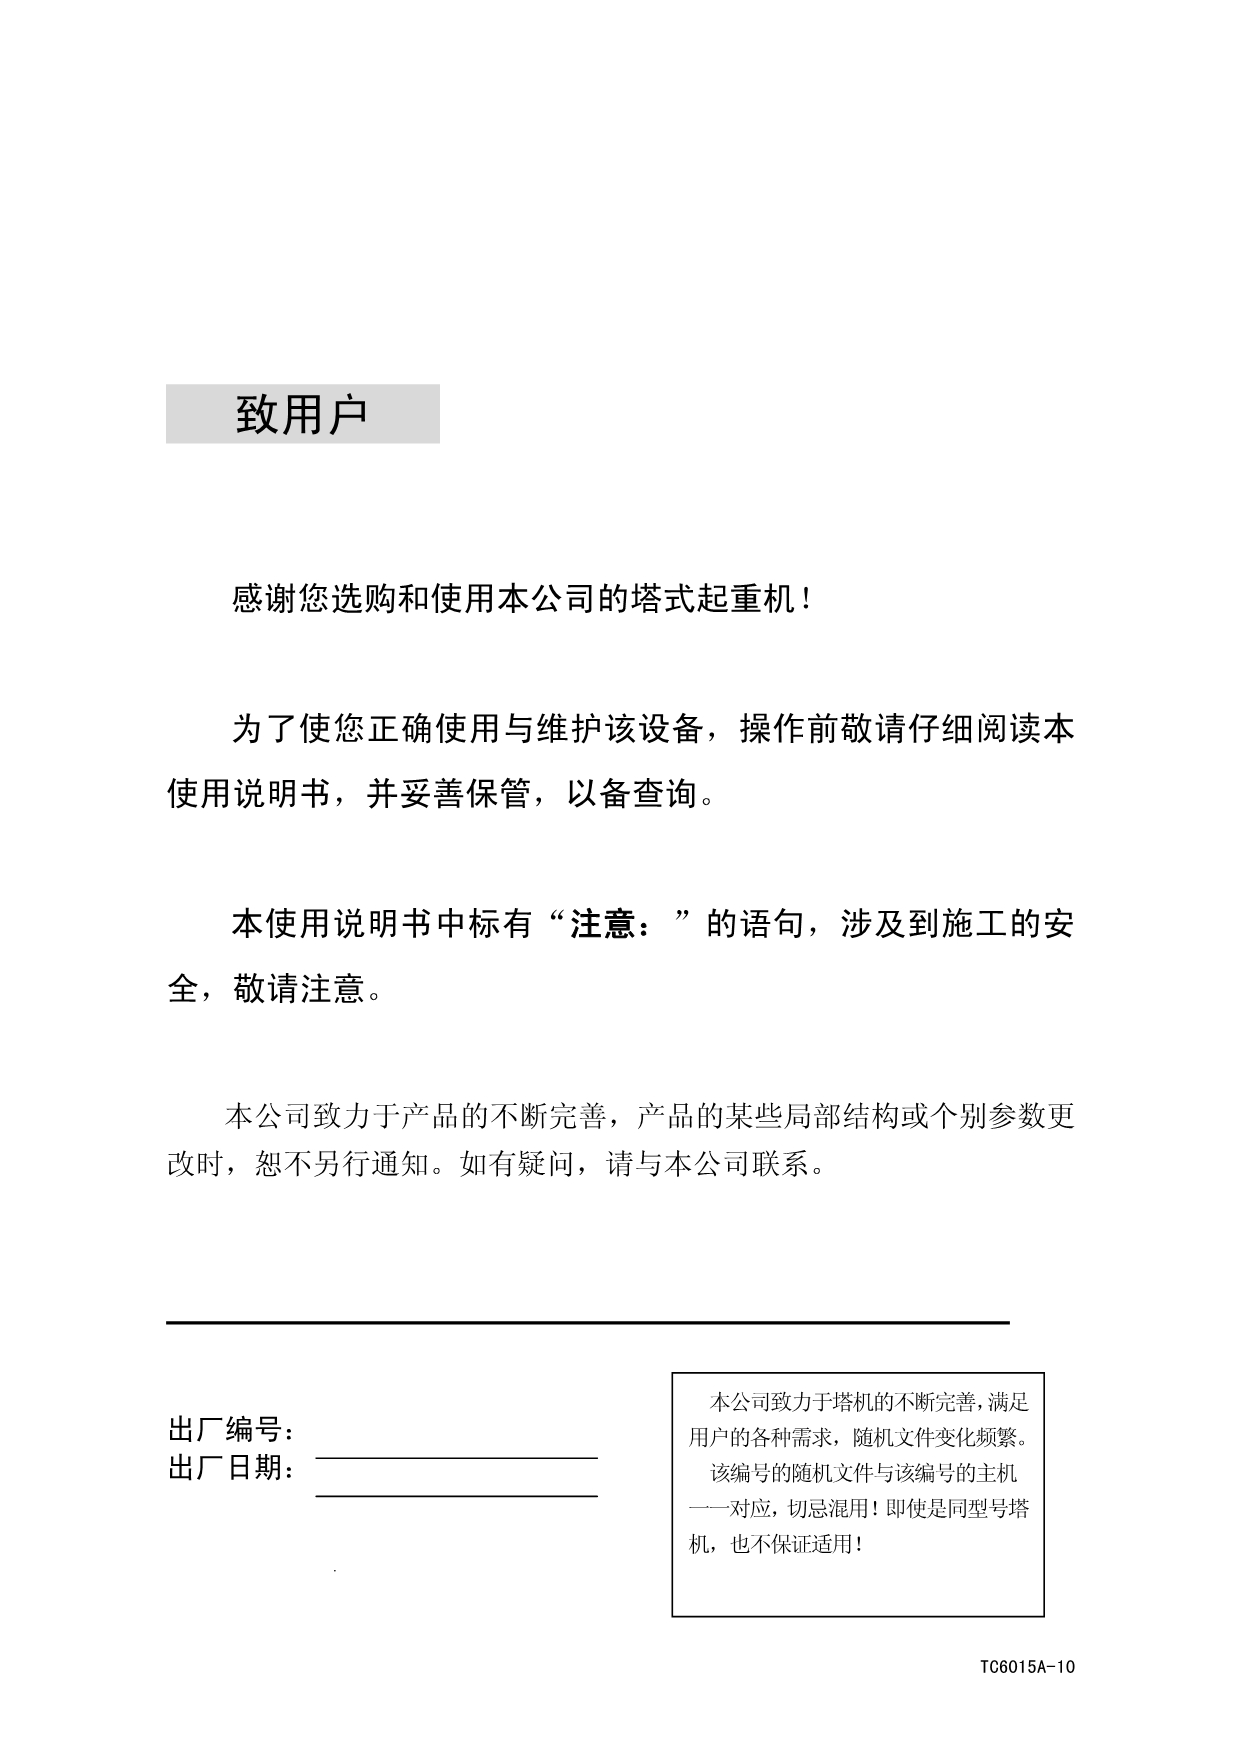 TC6015A-10中文版说明书(2012-02)_第2页